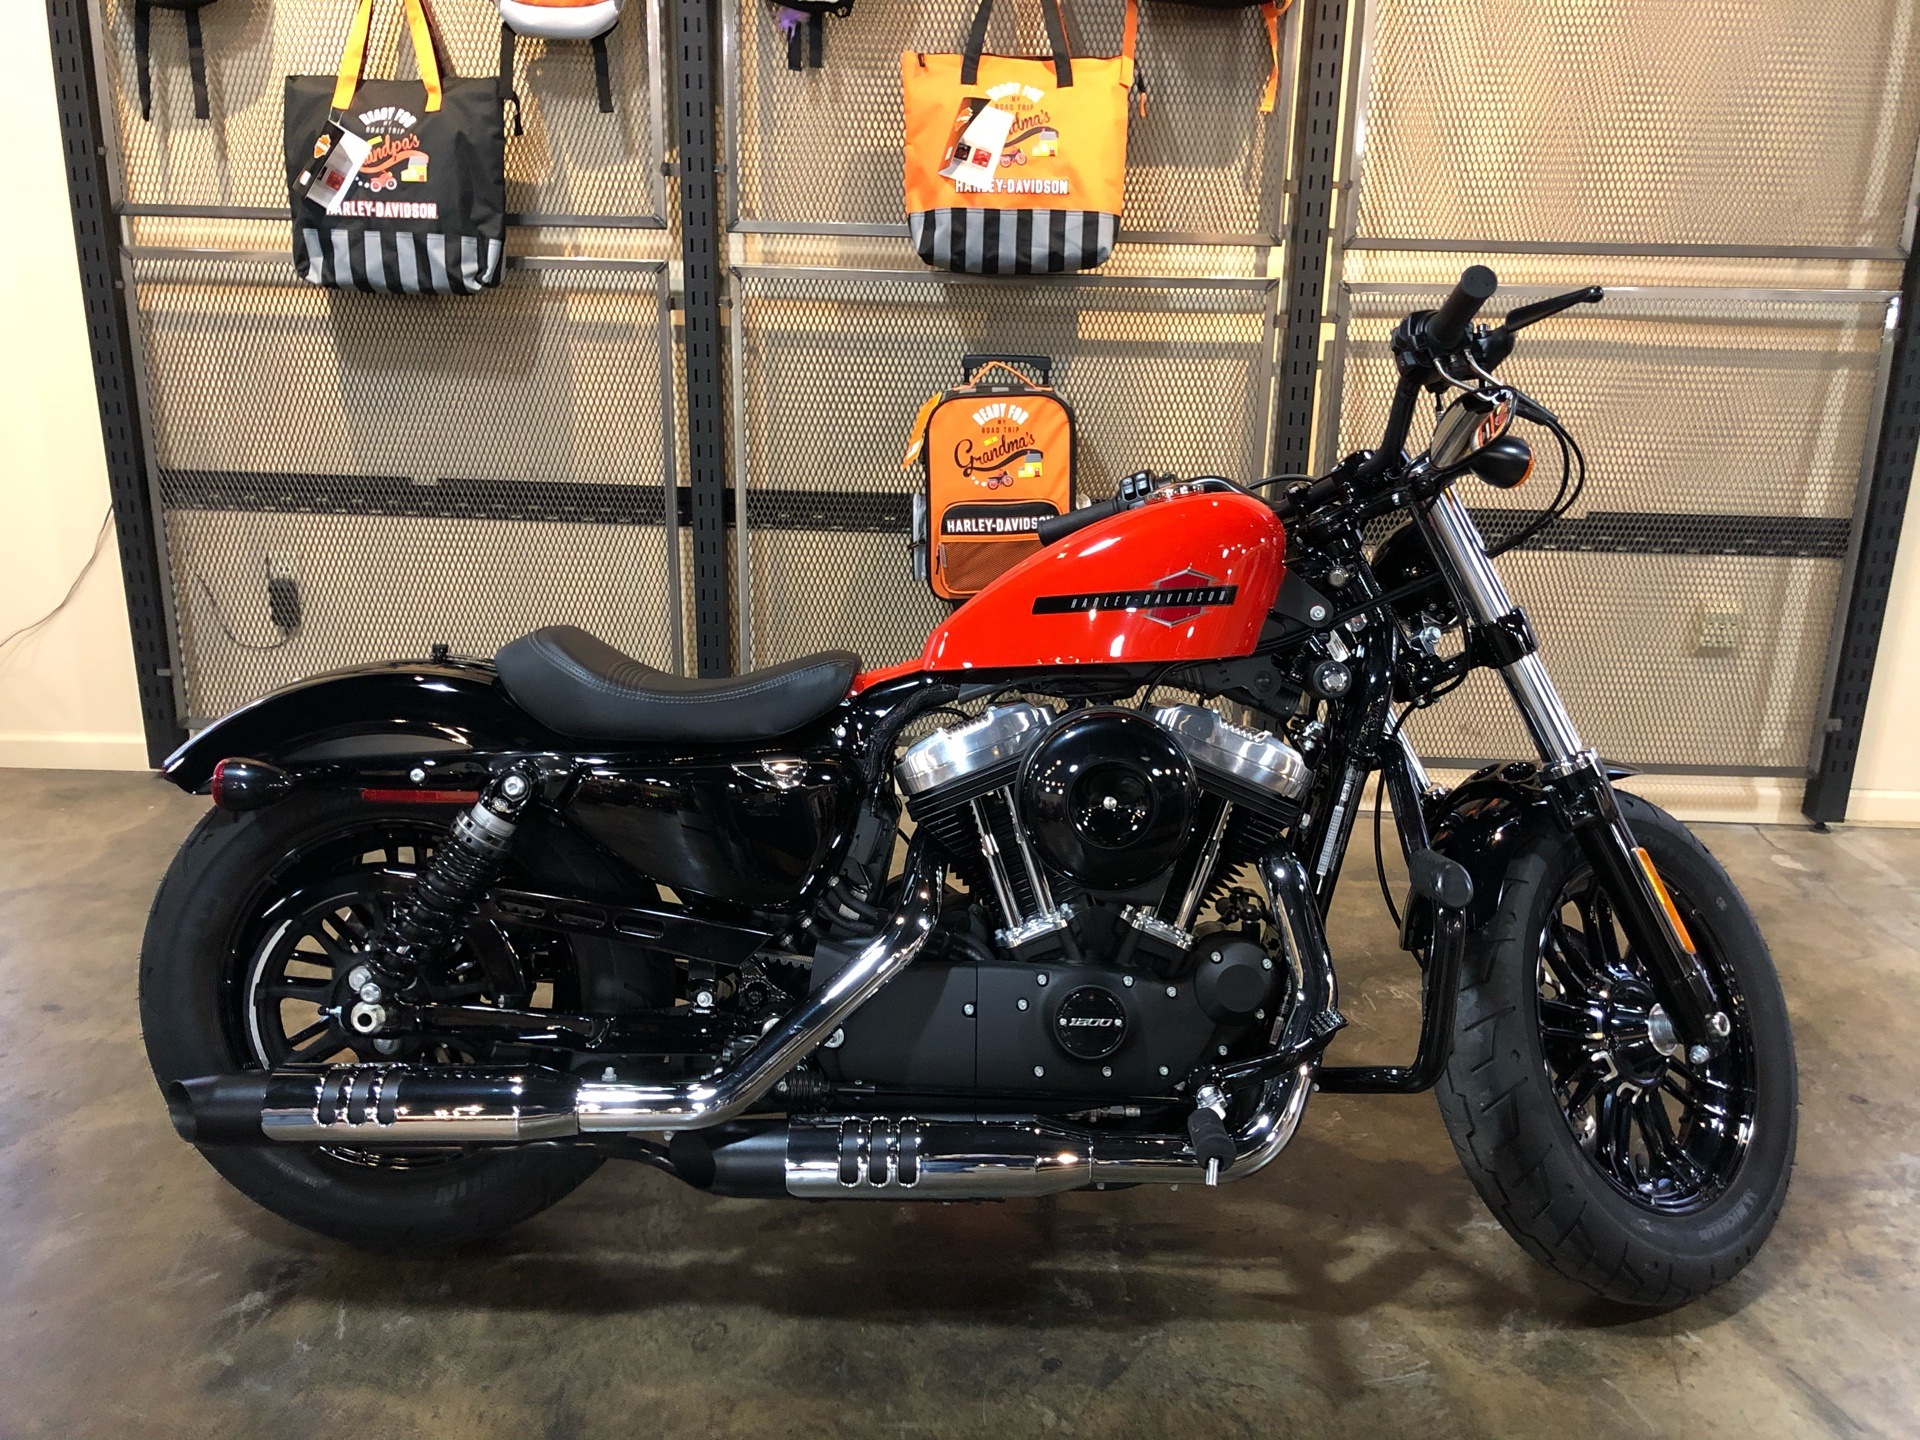 Used 2020 Harley Davidson Forty Eight Performance Orange Motorcycles In Jonesboro Ar B423848